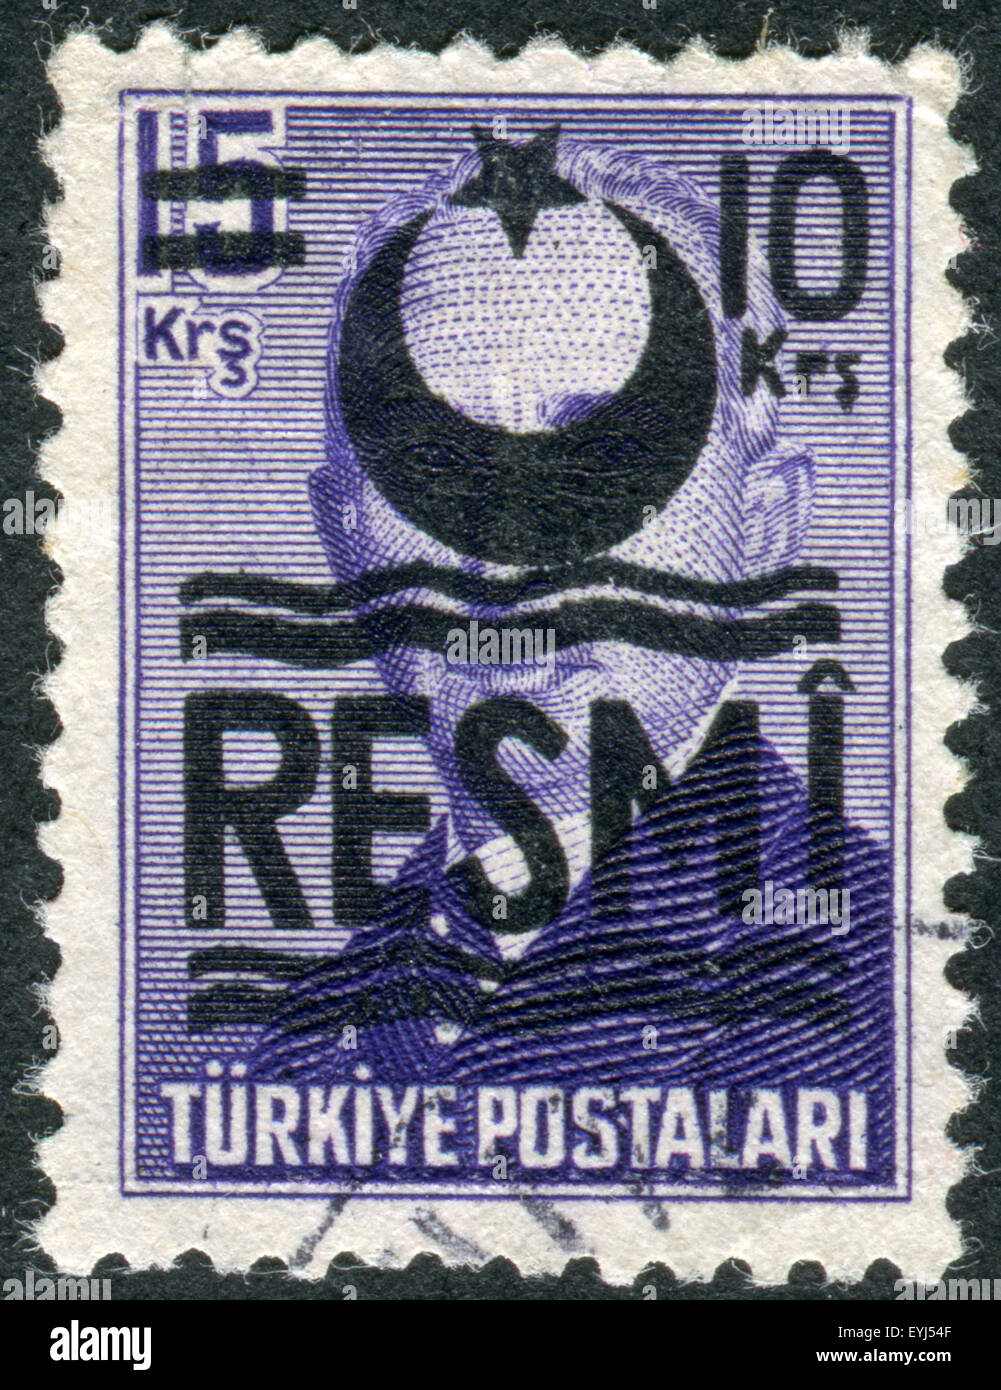 Postage stamp printed in Turkey (overprint 'RESMI', 1953), depicted the 2nd President of Turkey, Mustafa Ismet Inonu Stock Photo